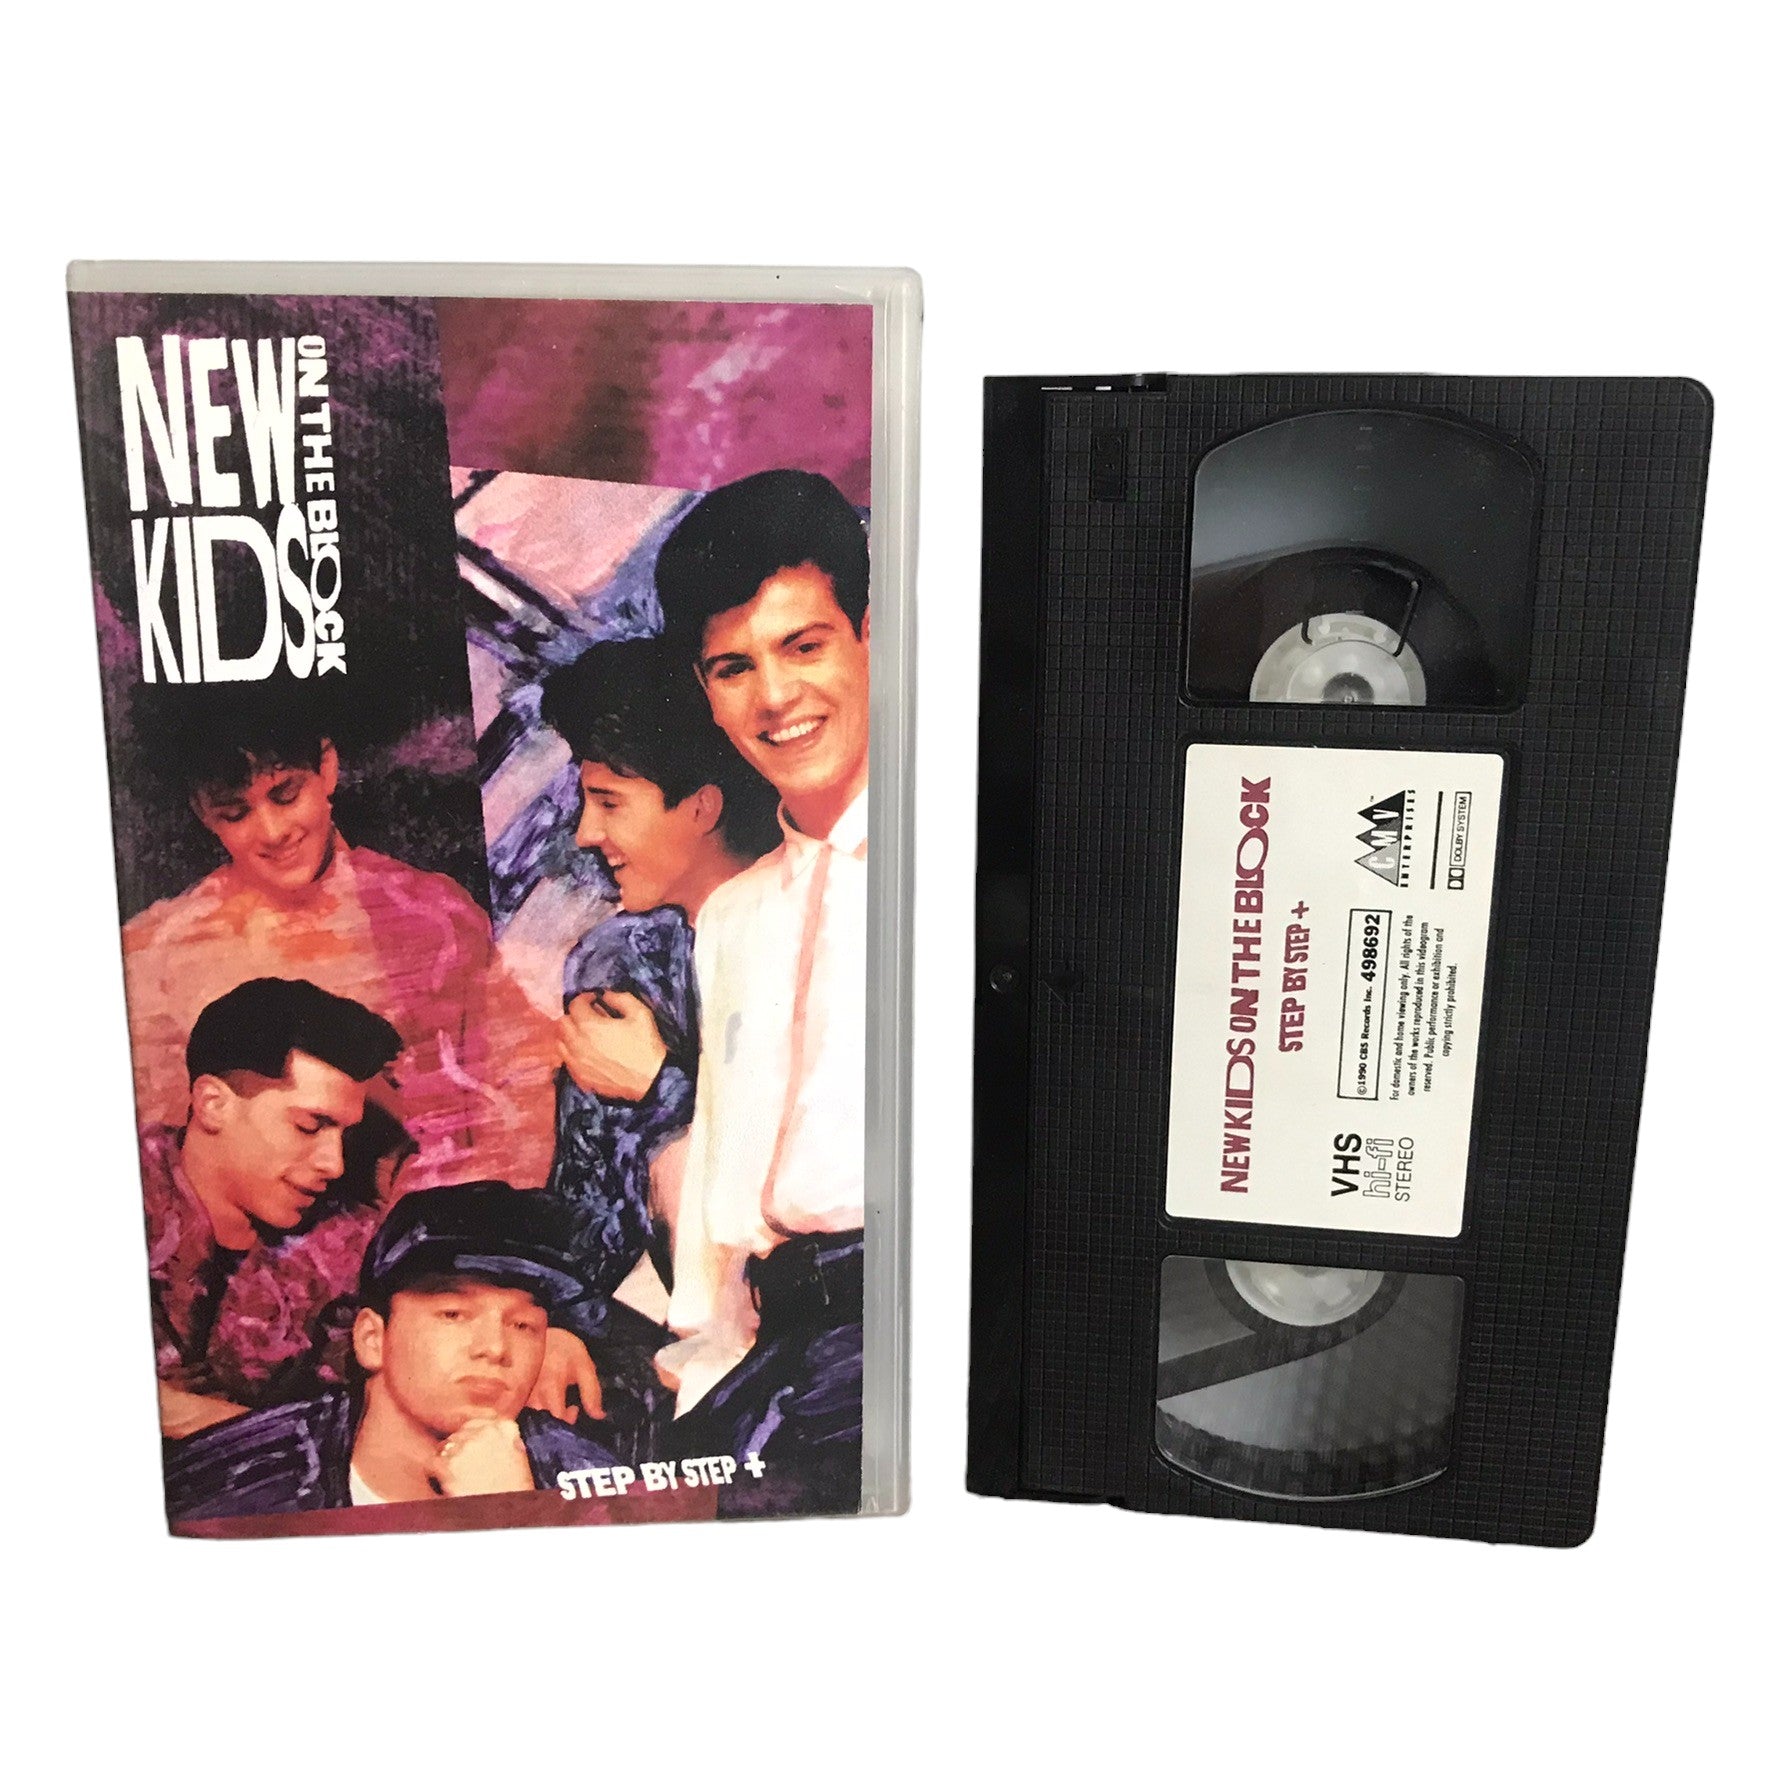 New Kids on the Block: Step By Step - Joey McIntyre - CMV Enterprises - Music - Pal - VHS-